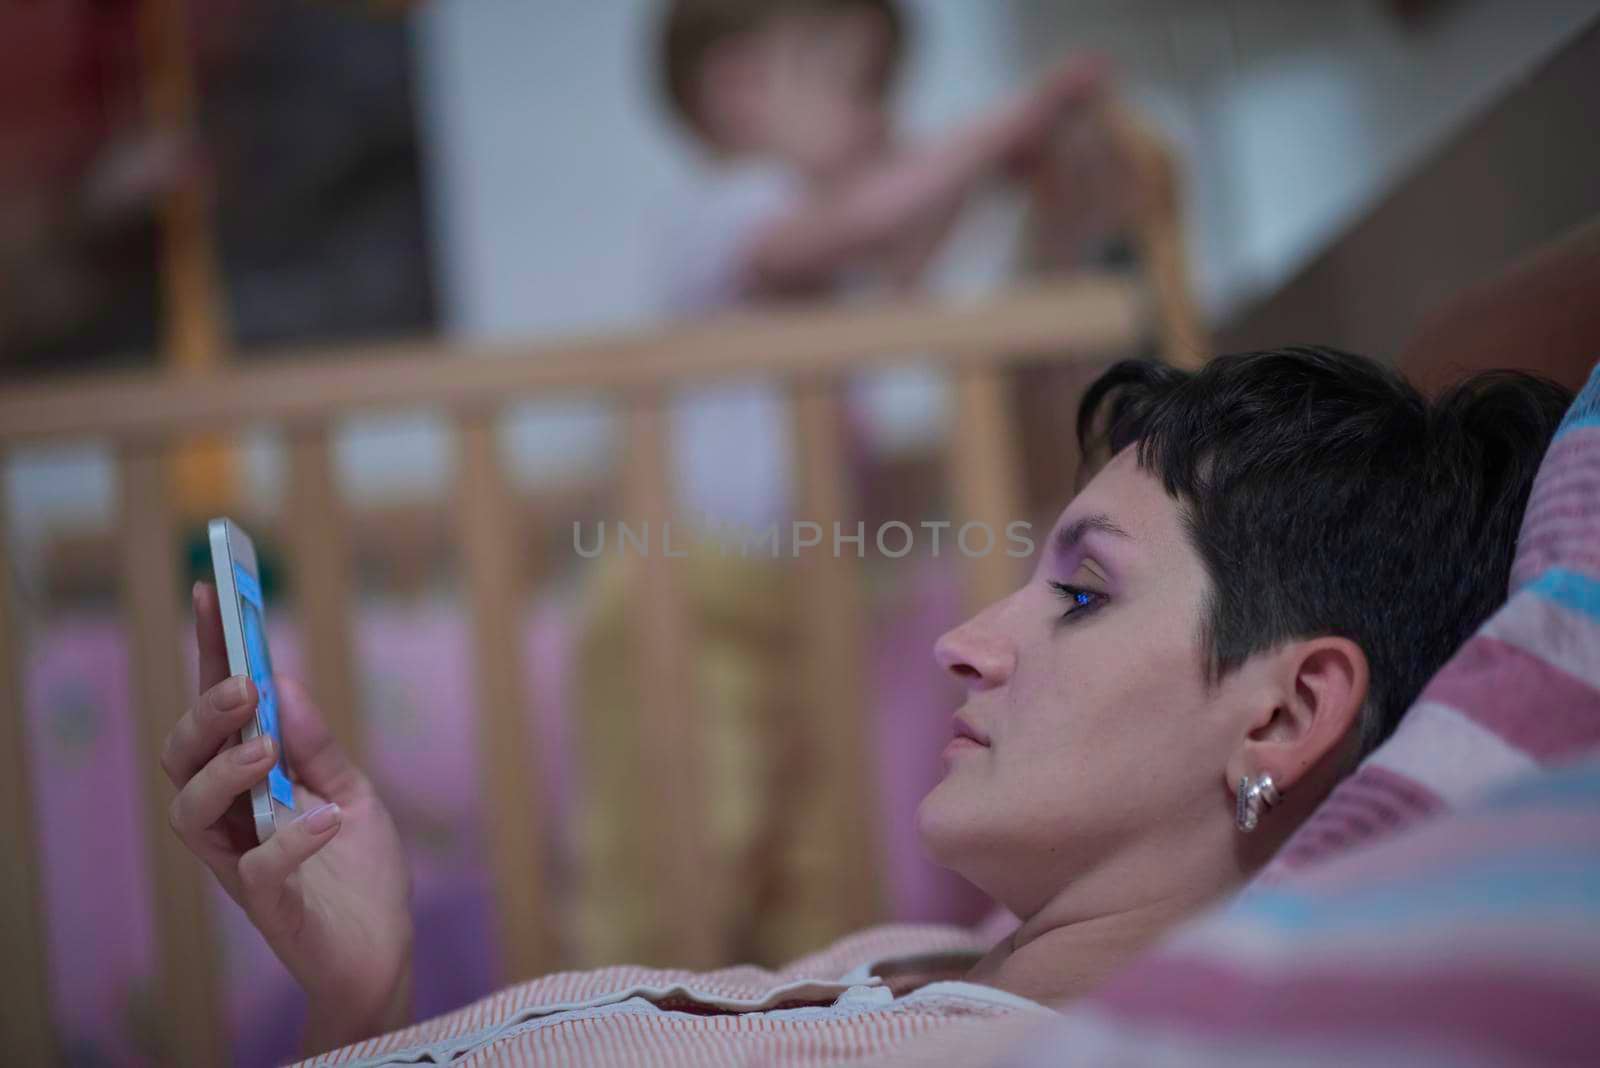 mother is using smarphone in bed while baby sleeping by dotshock